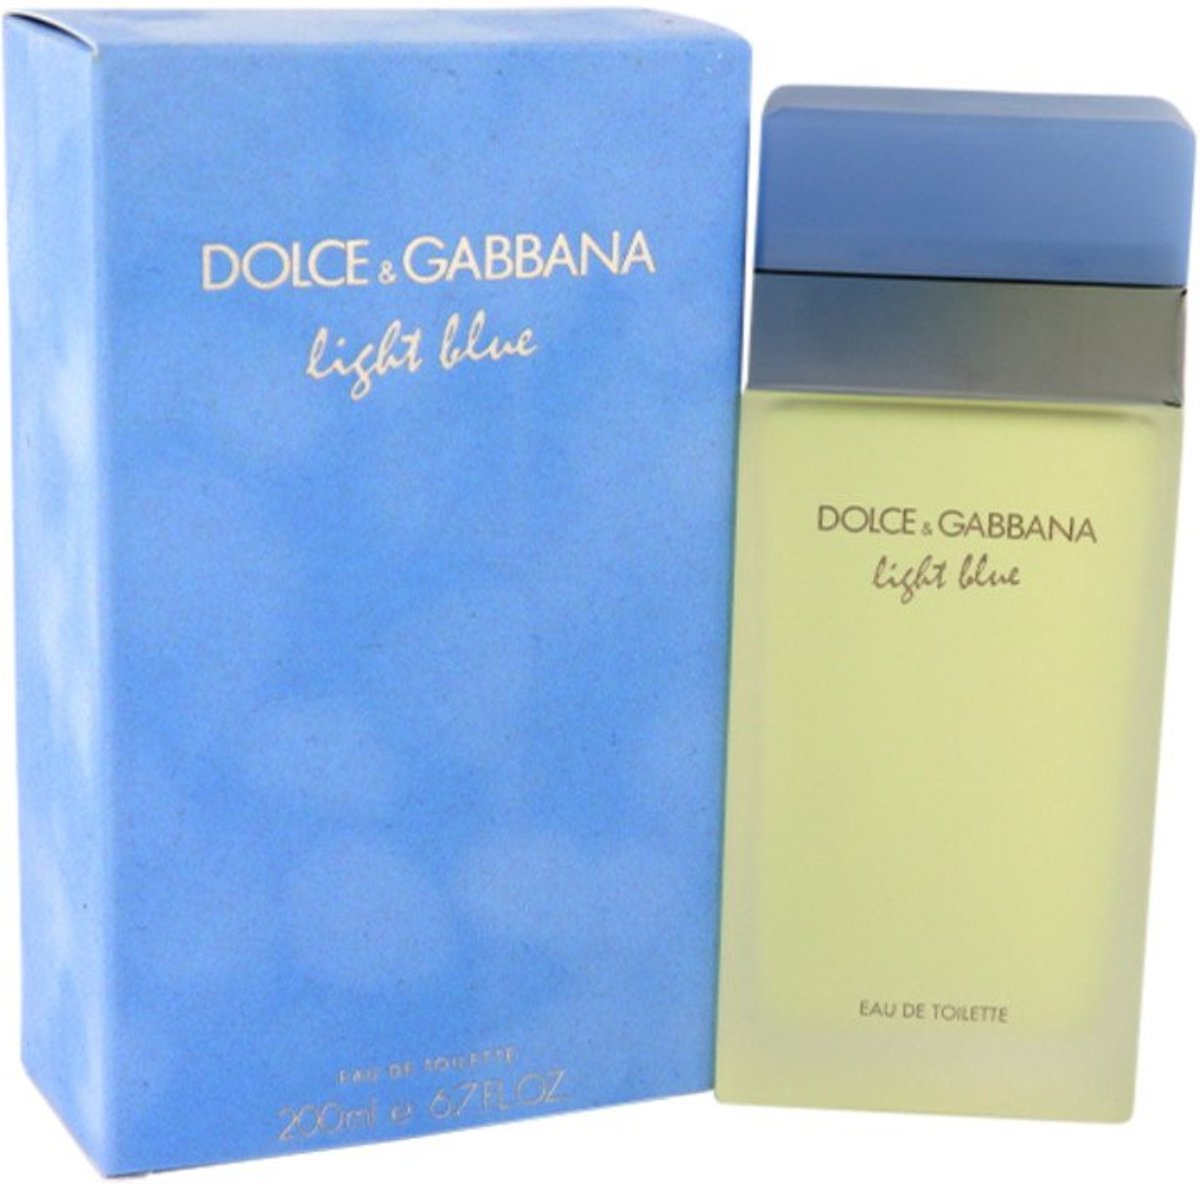 reviews light blue dolce and gabbana